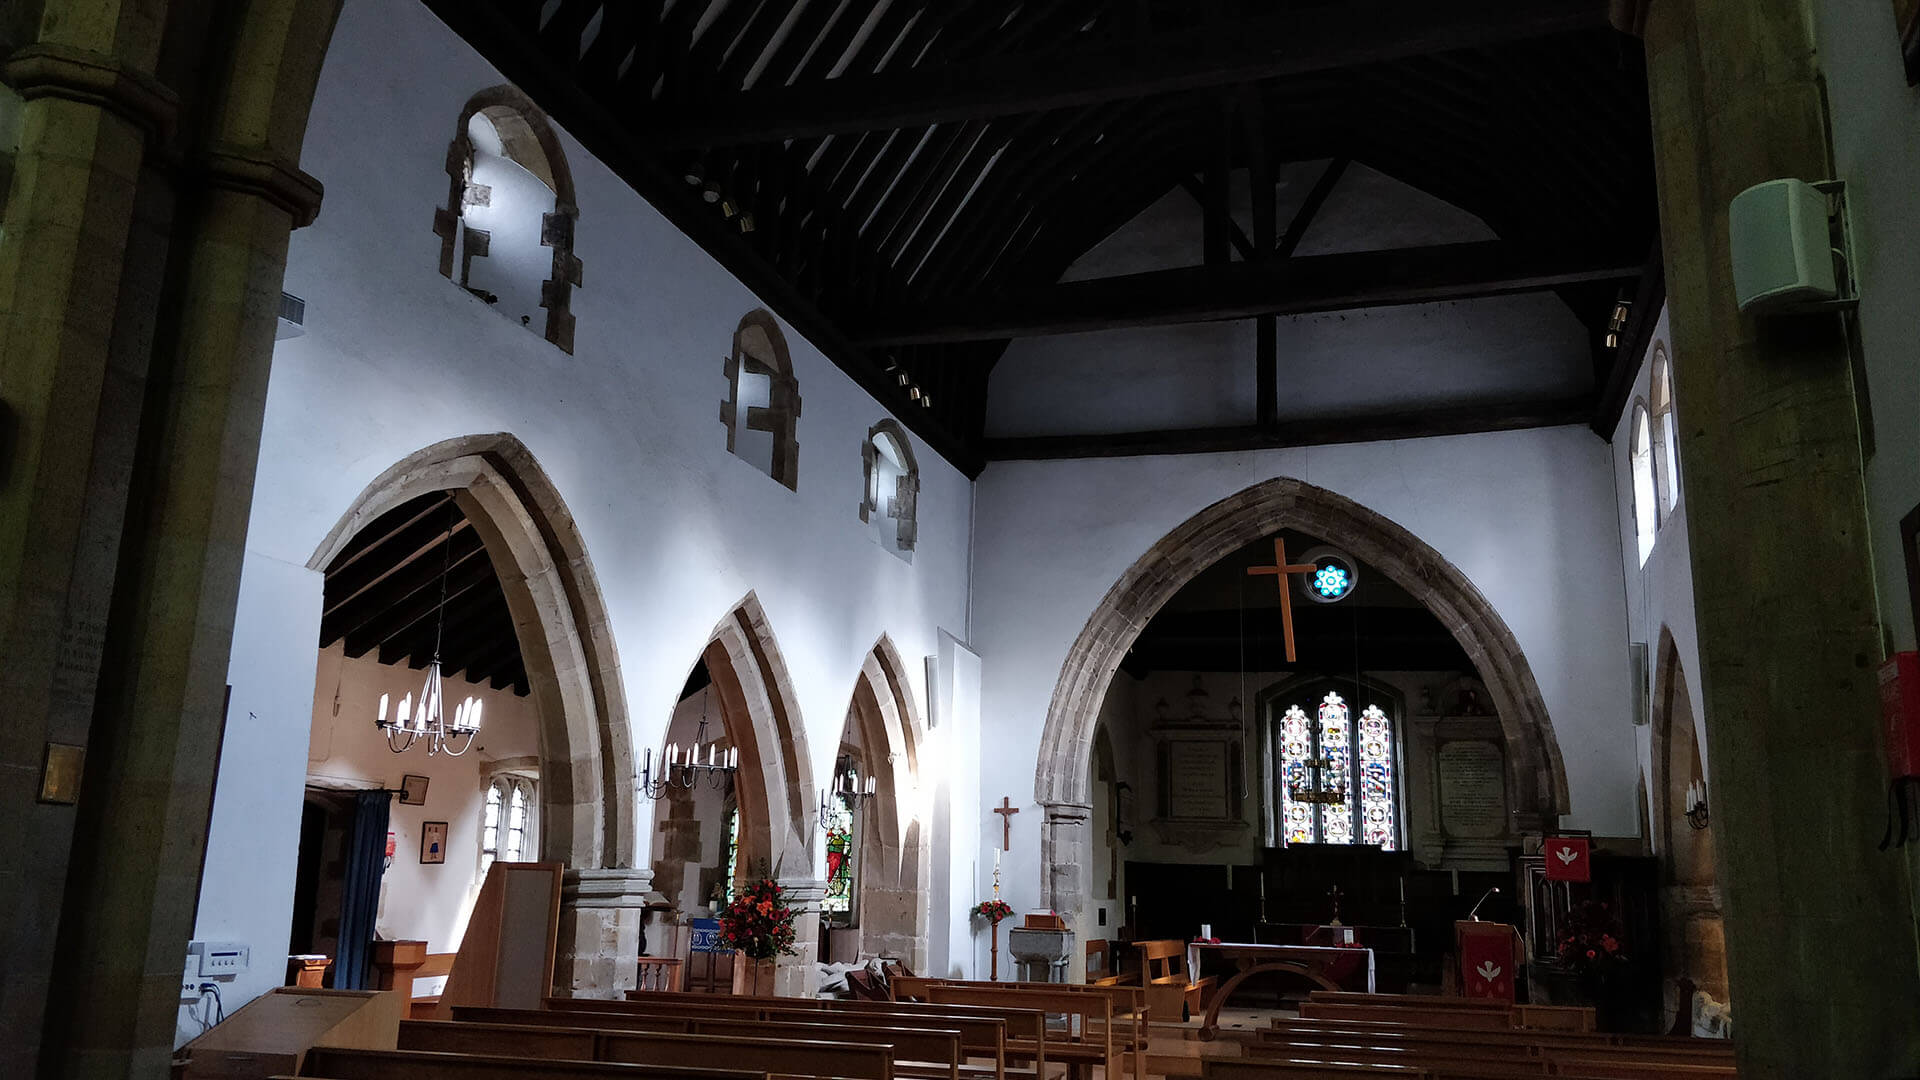 Interior of St Margaret's church, Ifield